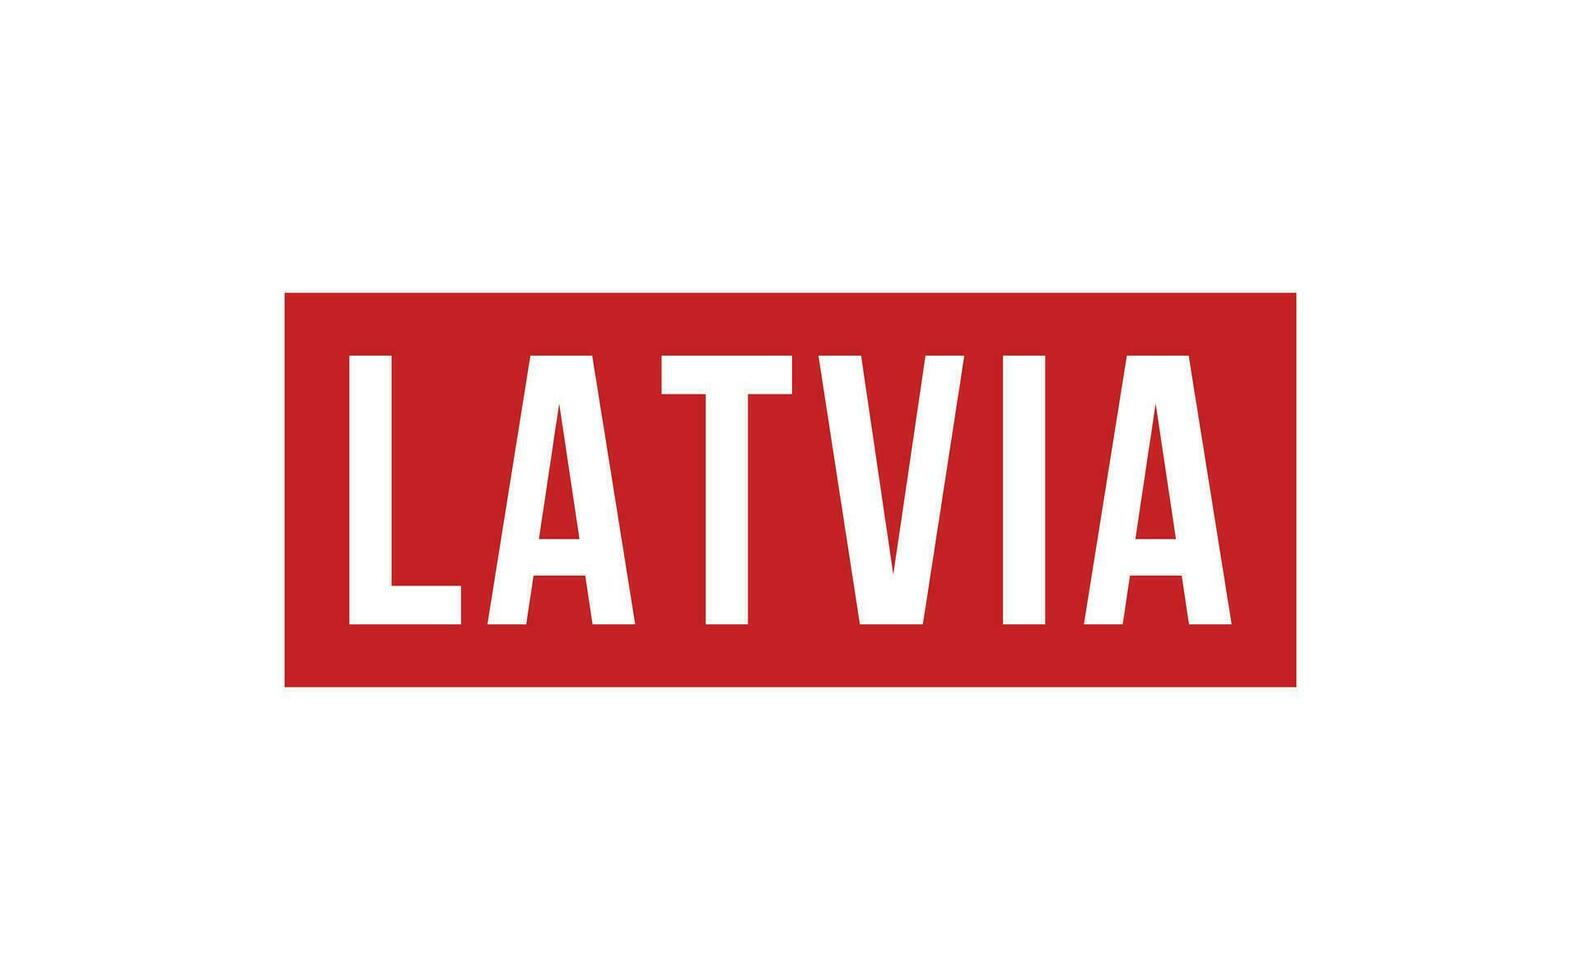 Letland rubber postzegel zegel vector